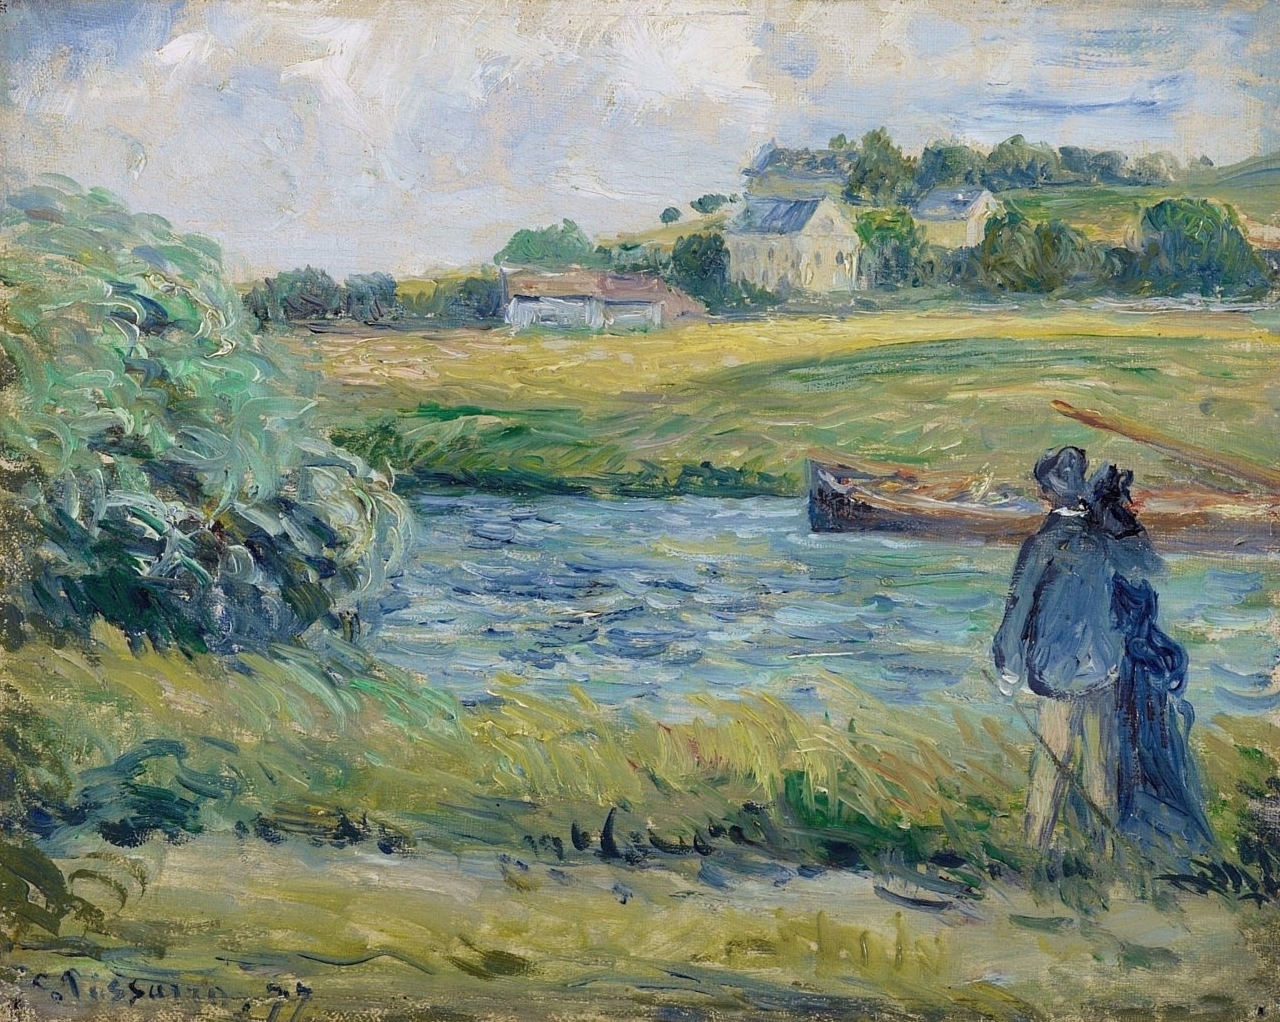 Camille+Pissarro-1830-1903 (351).jpg